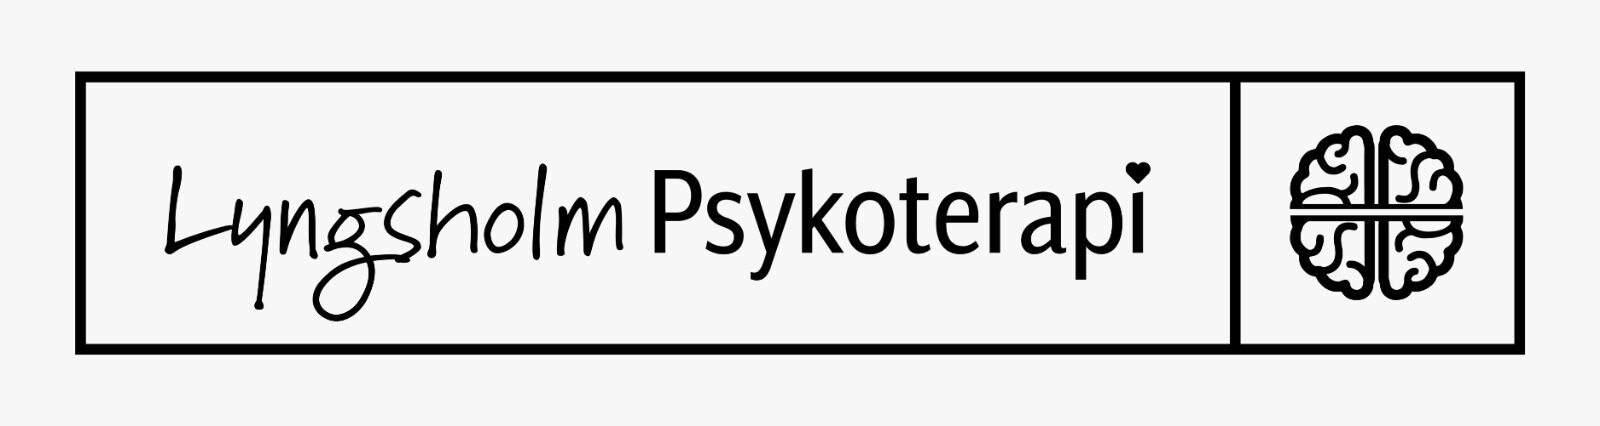 Lyngsholm Psykoterapi